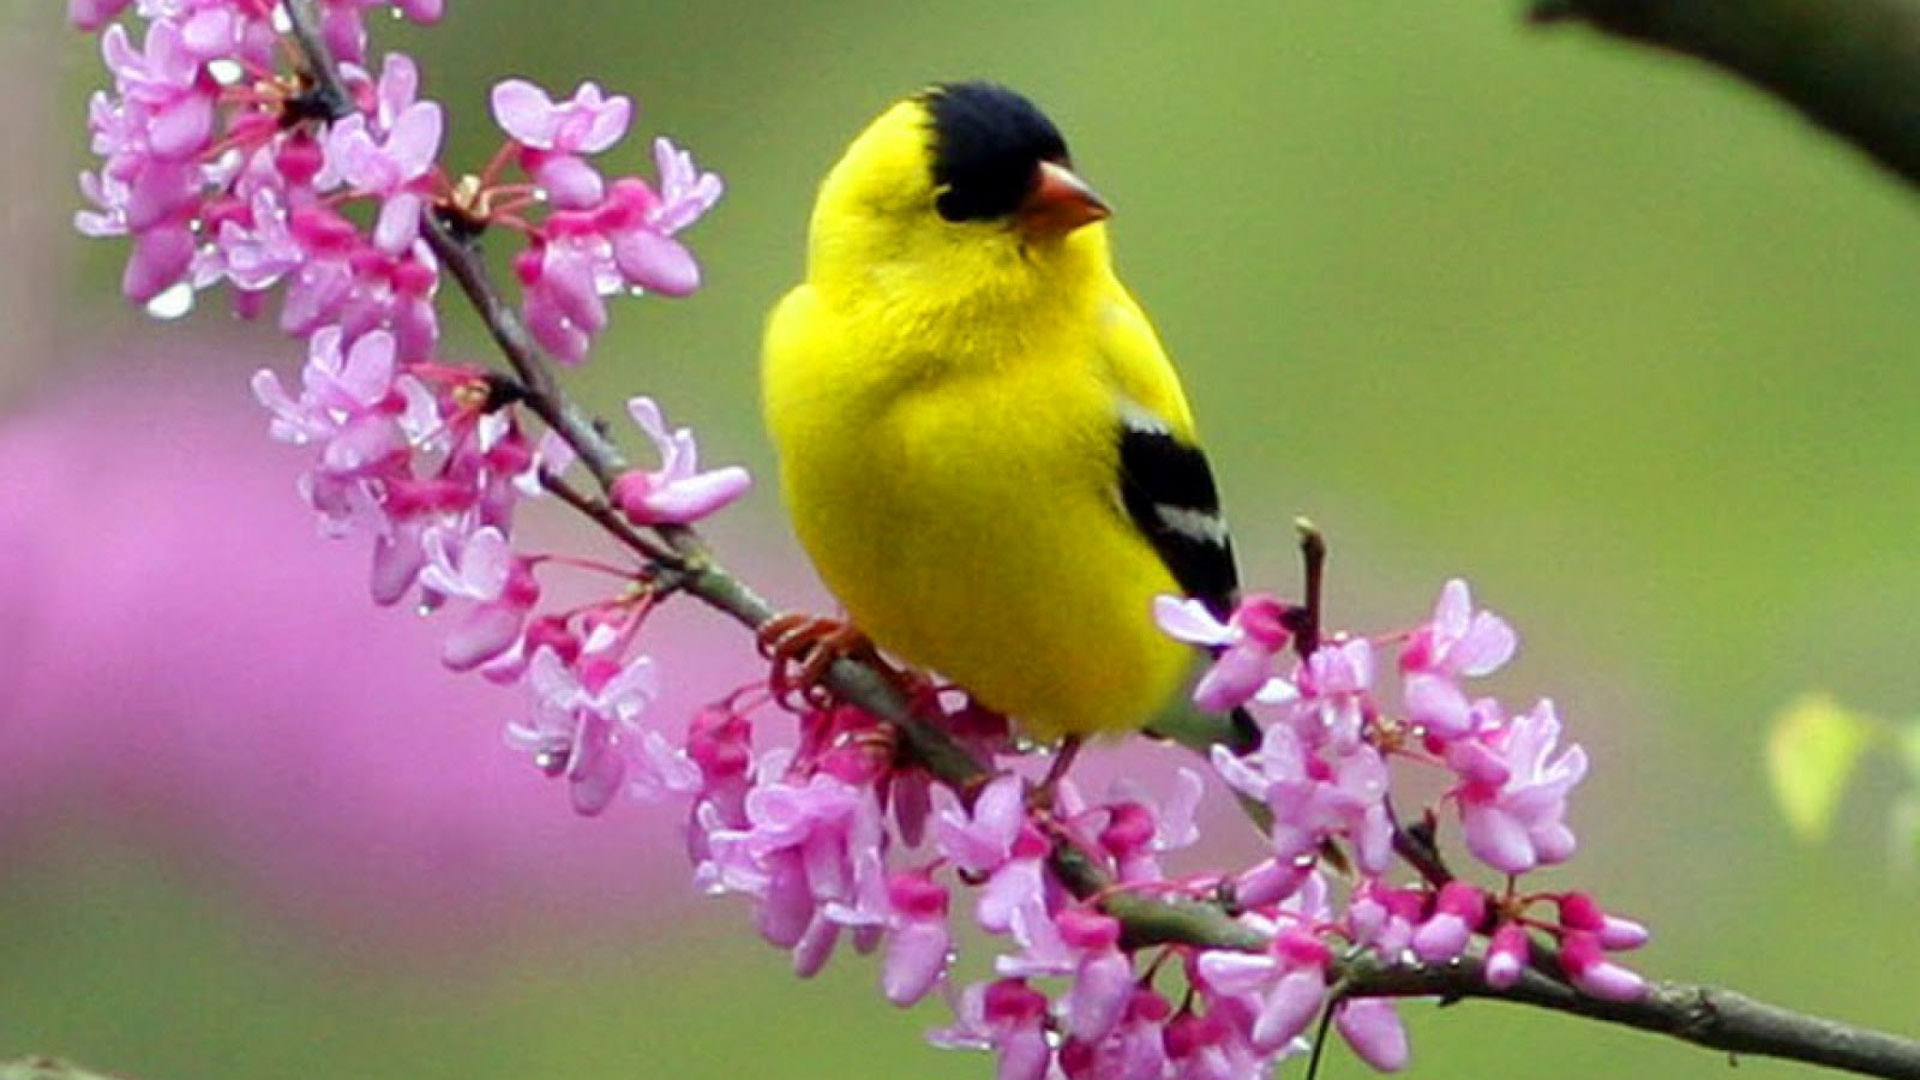 Yellow Black Bird Is Sitting On Flowers Stalk In Green Blur Wallpaper HD Birds